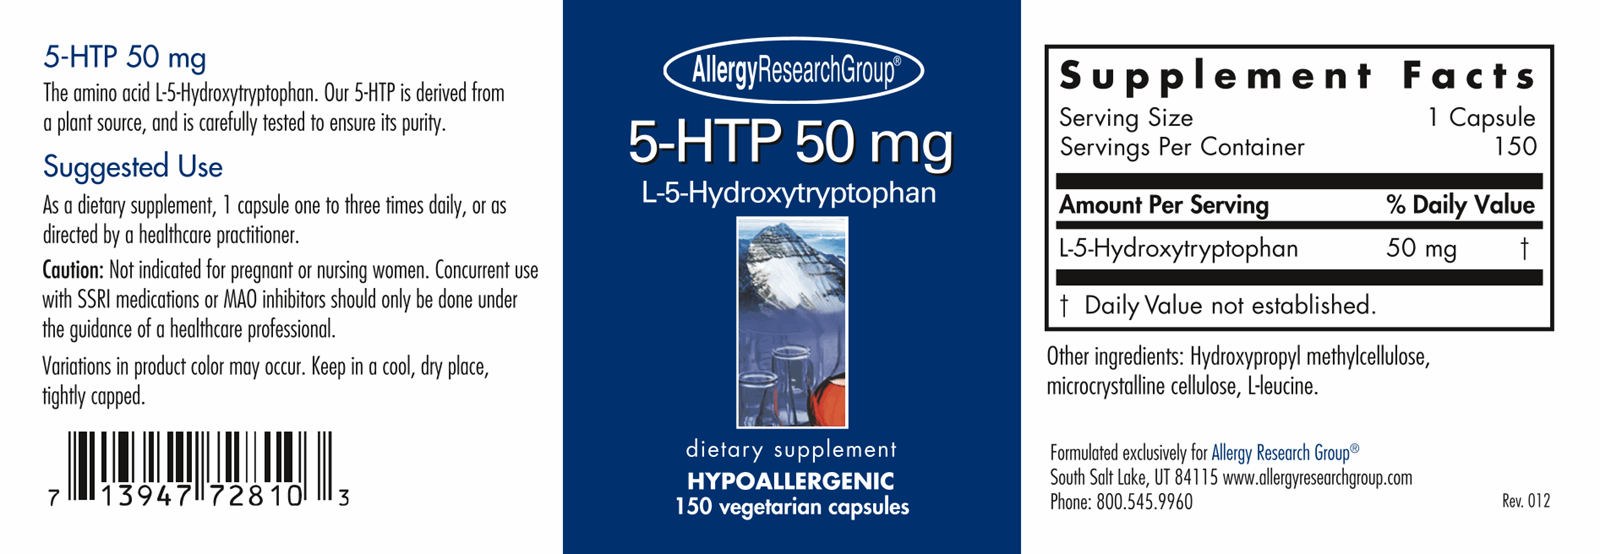 5-HTP 50 mg 